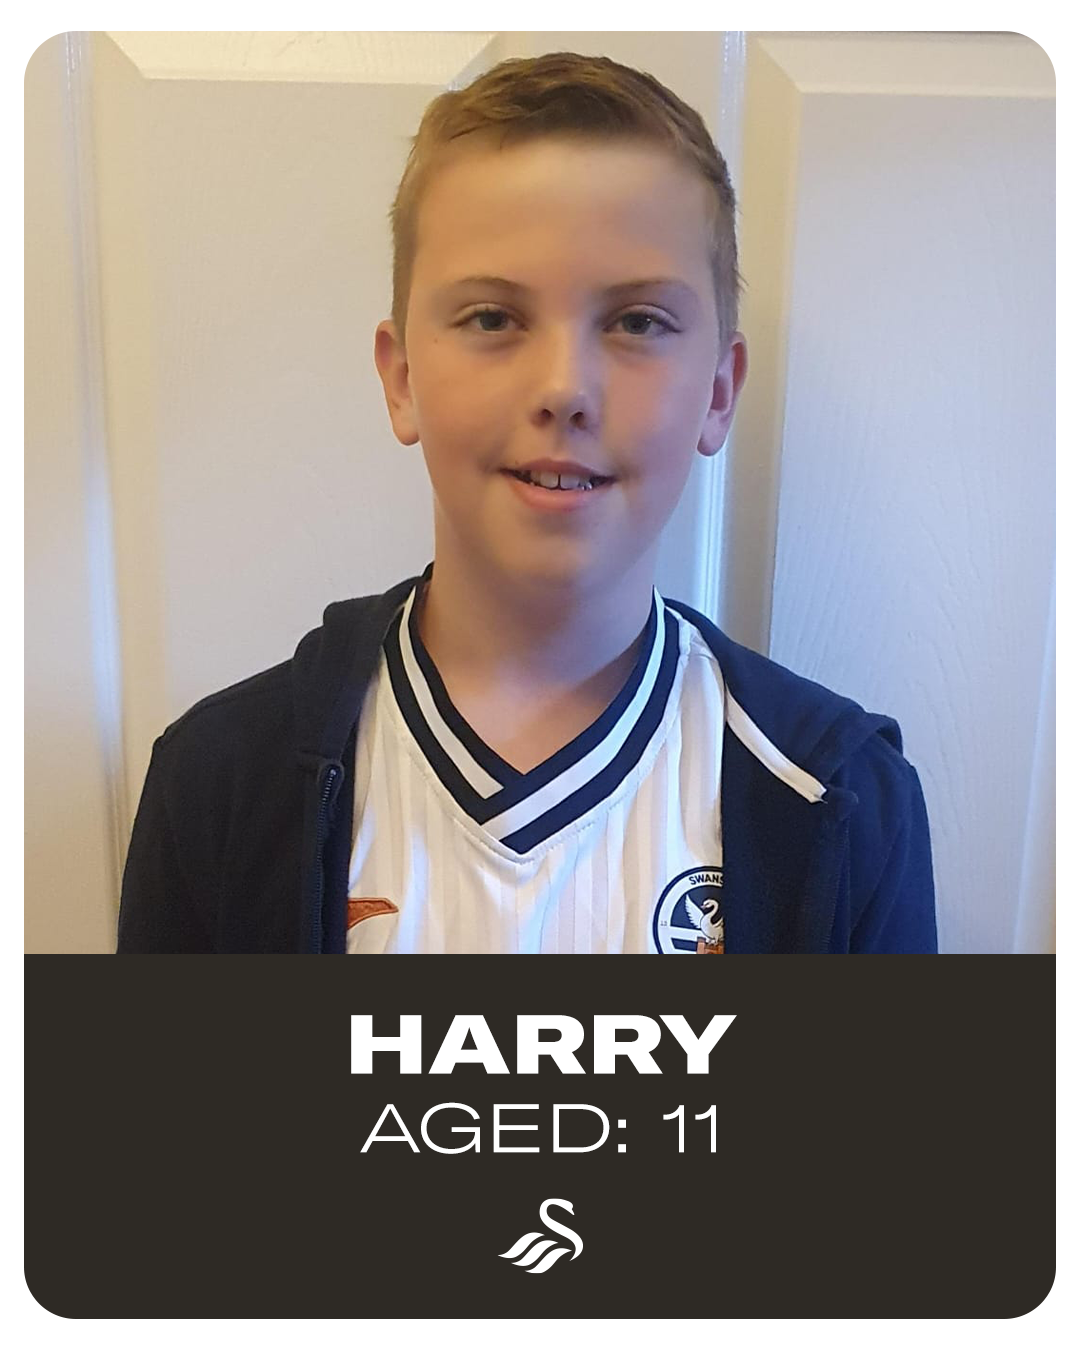 Harry, Aged 11